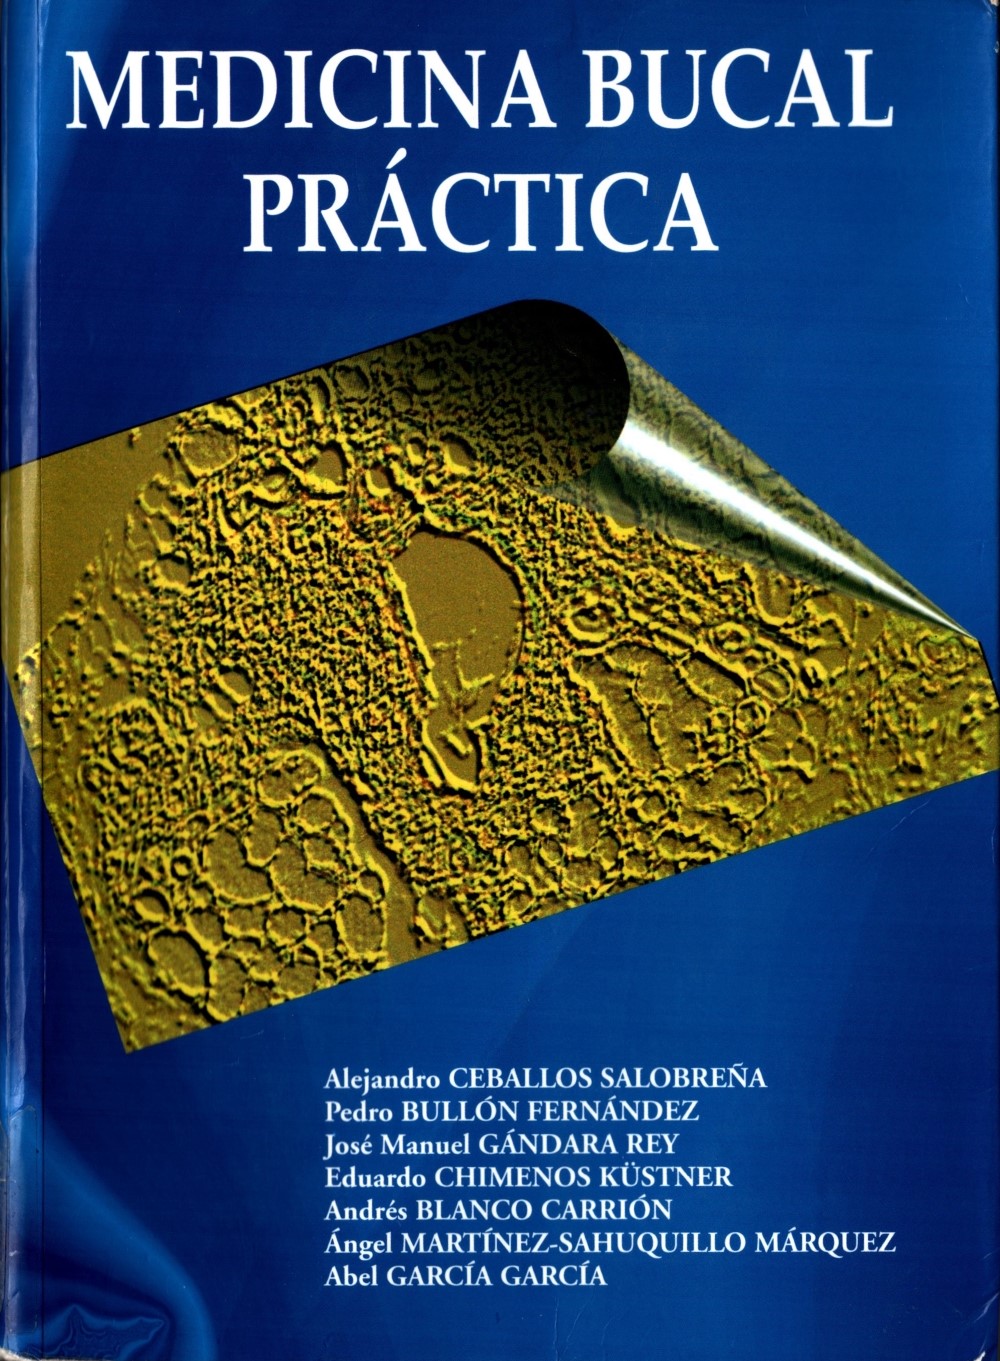 Imagen de portada del libro Medicina bucal práctica